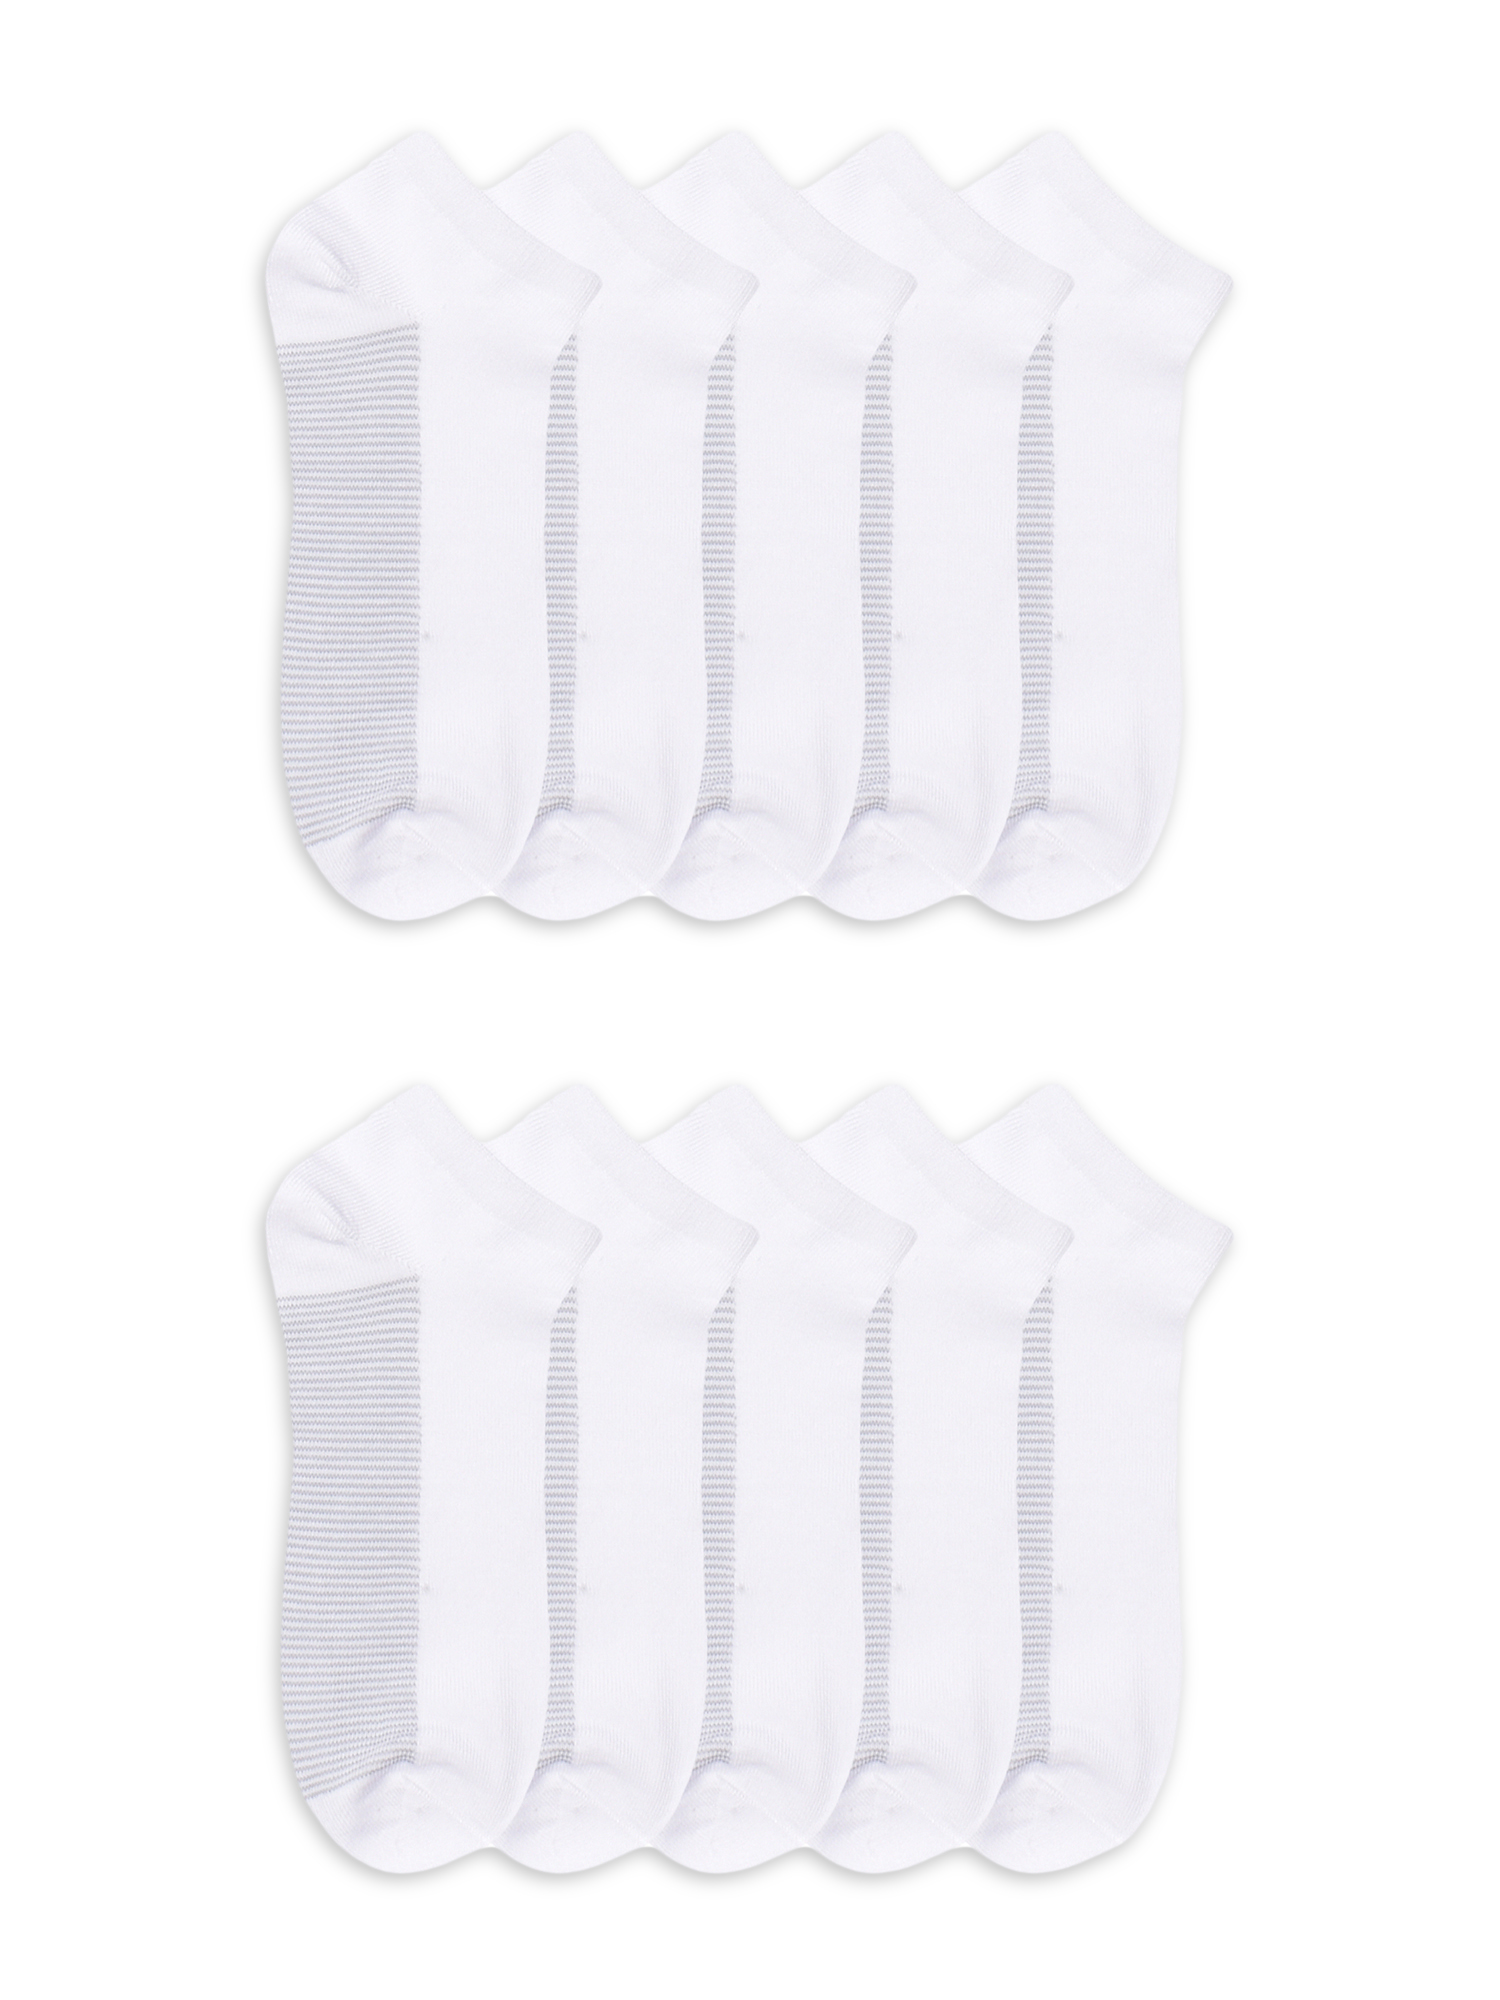 No Boundaries Women's Low-Cut Socks, 10-Pack, Sizes 4-10 - image 1 of 5